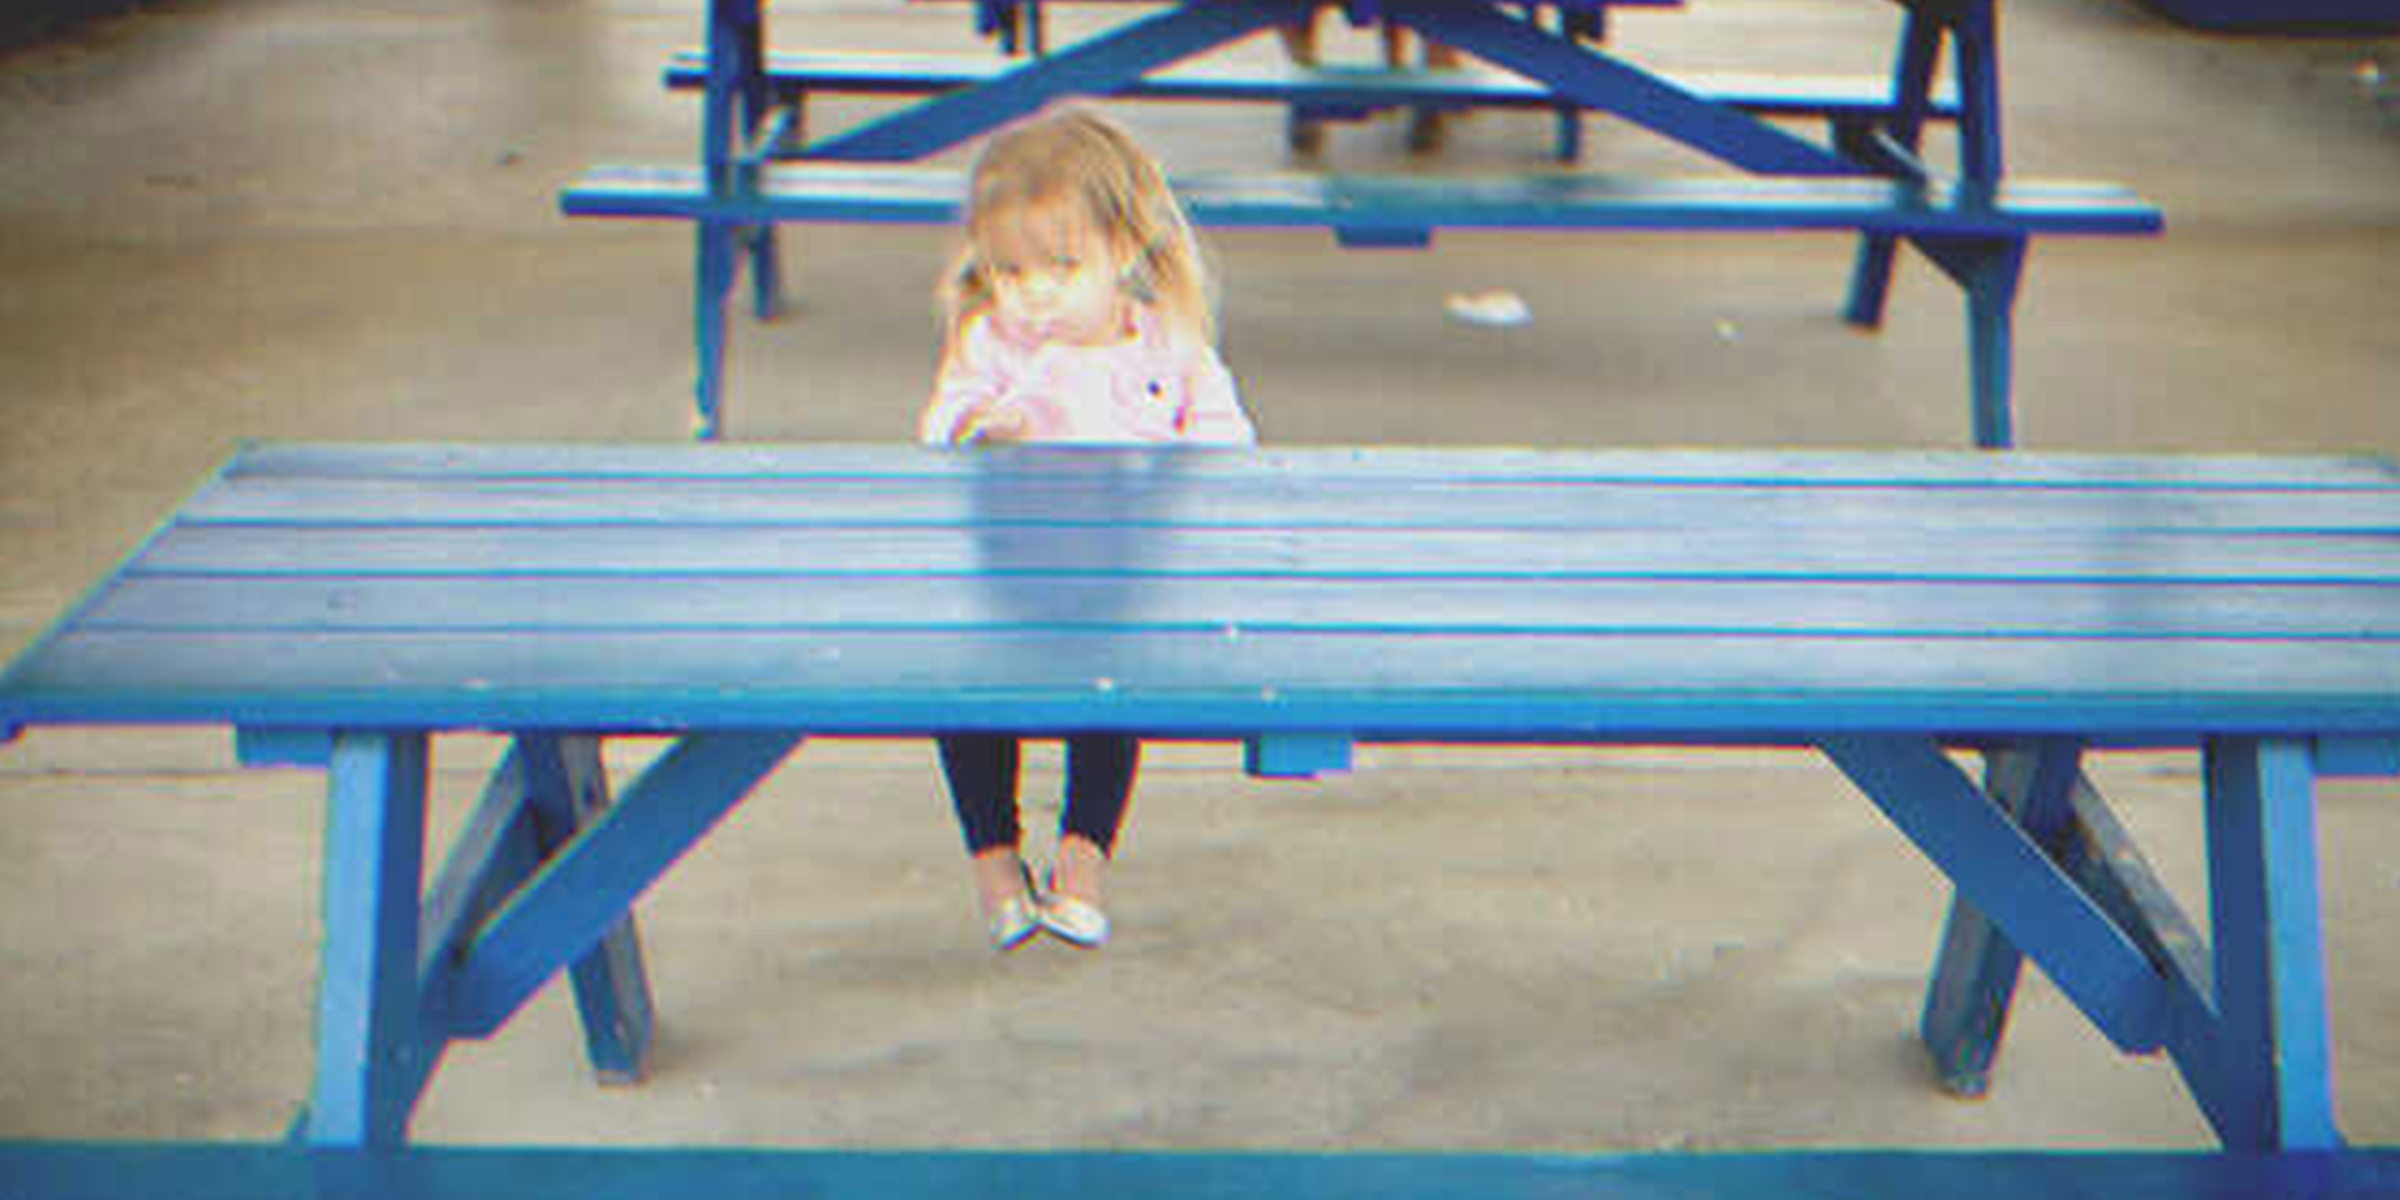 Little girl sitting on a park bench | Source: Shutterstock